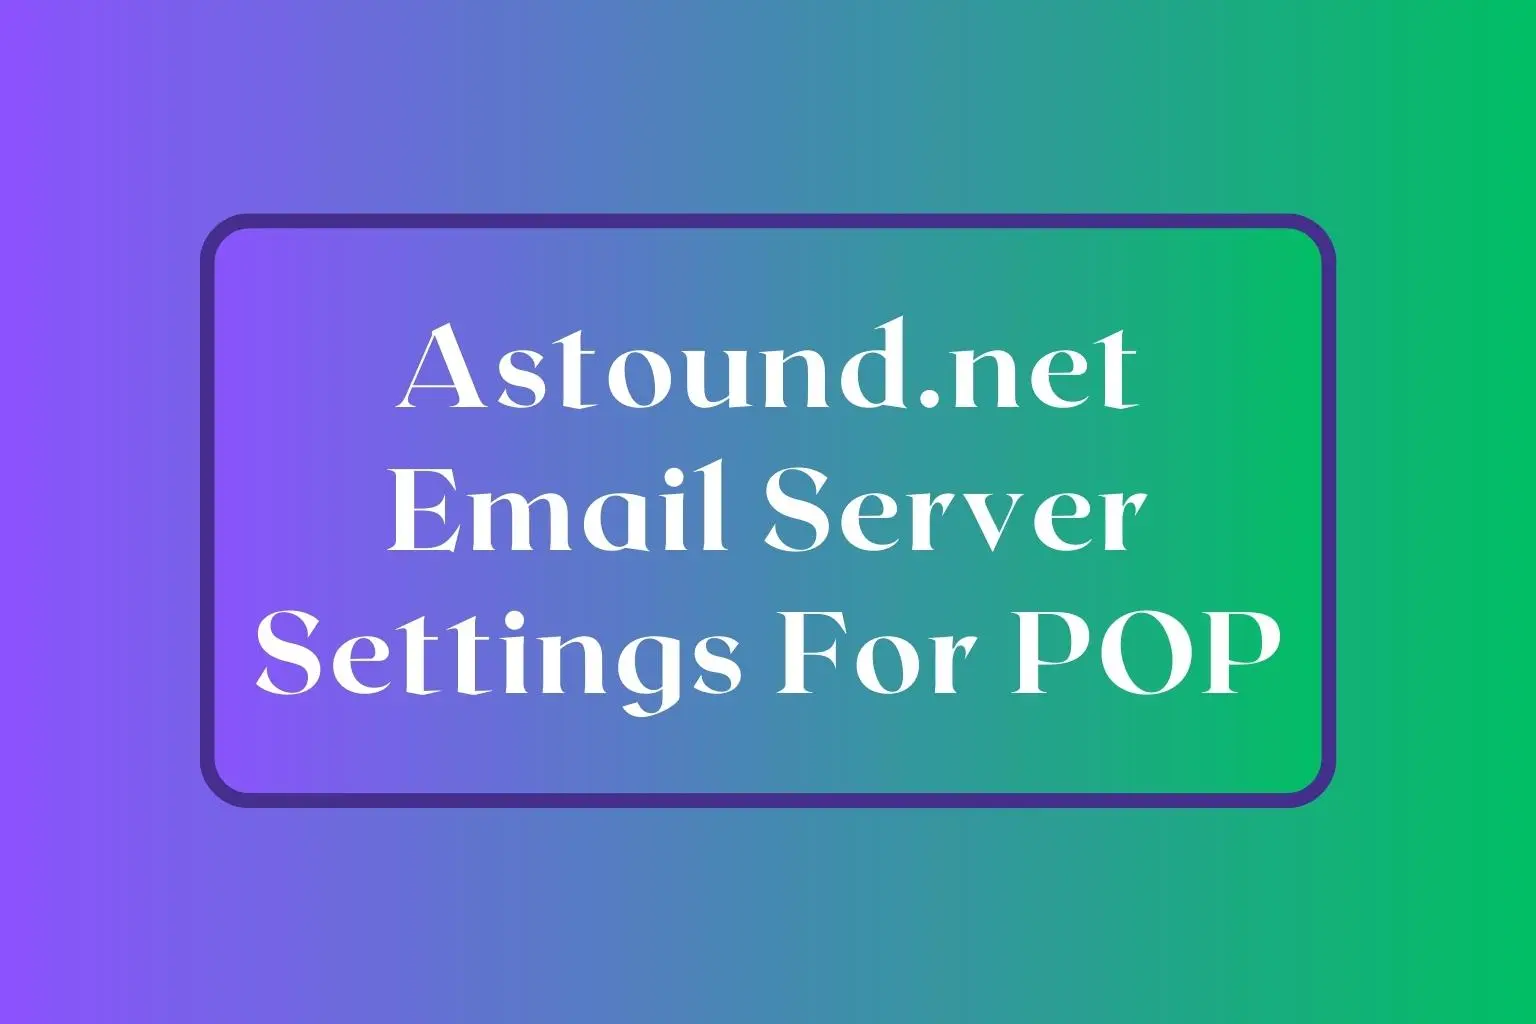 astound.net email server settings pop